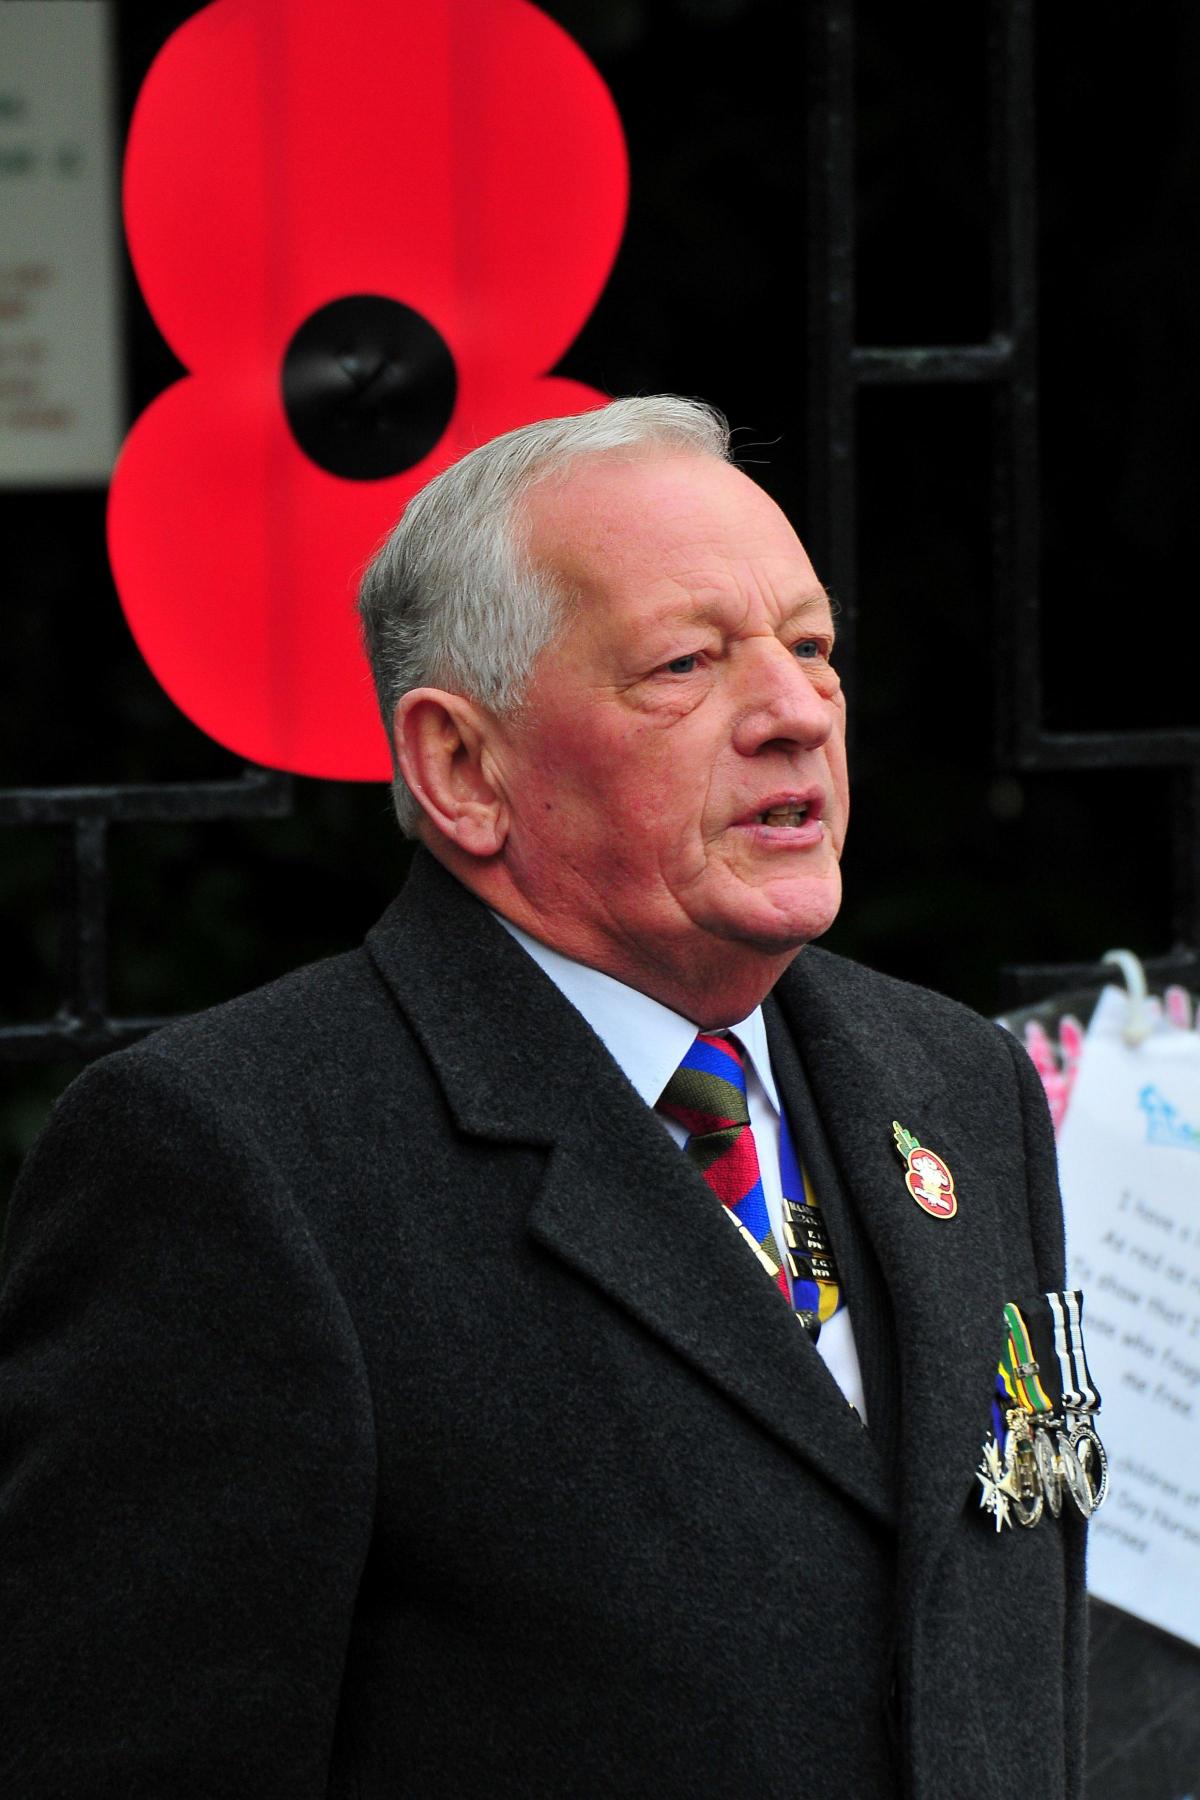 Major Ken Burton, President of Ammanford
British Legion remembers the
fallen Picture: Mark Davies